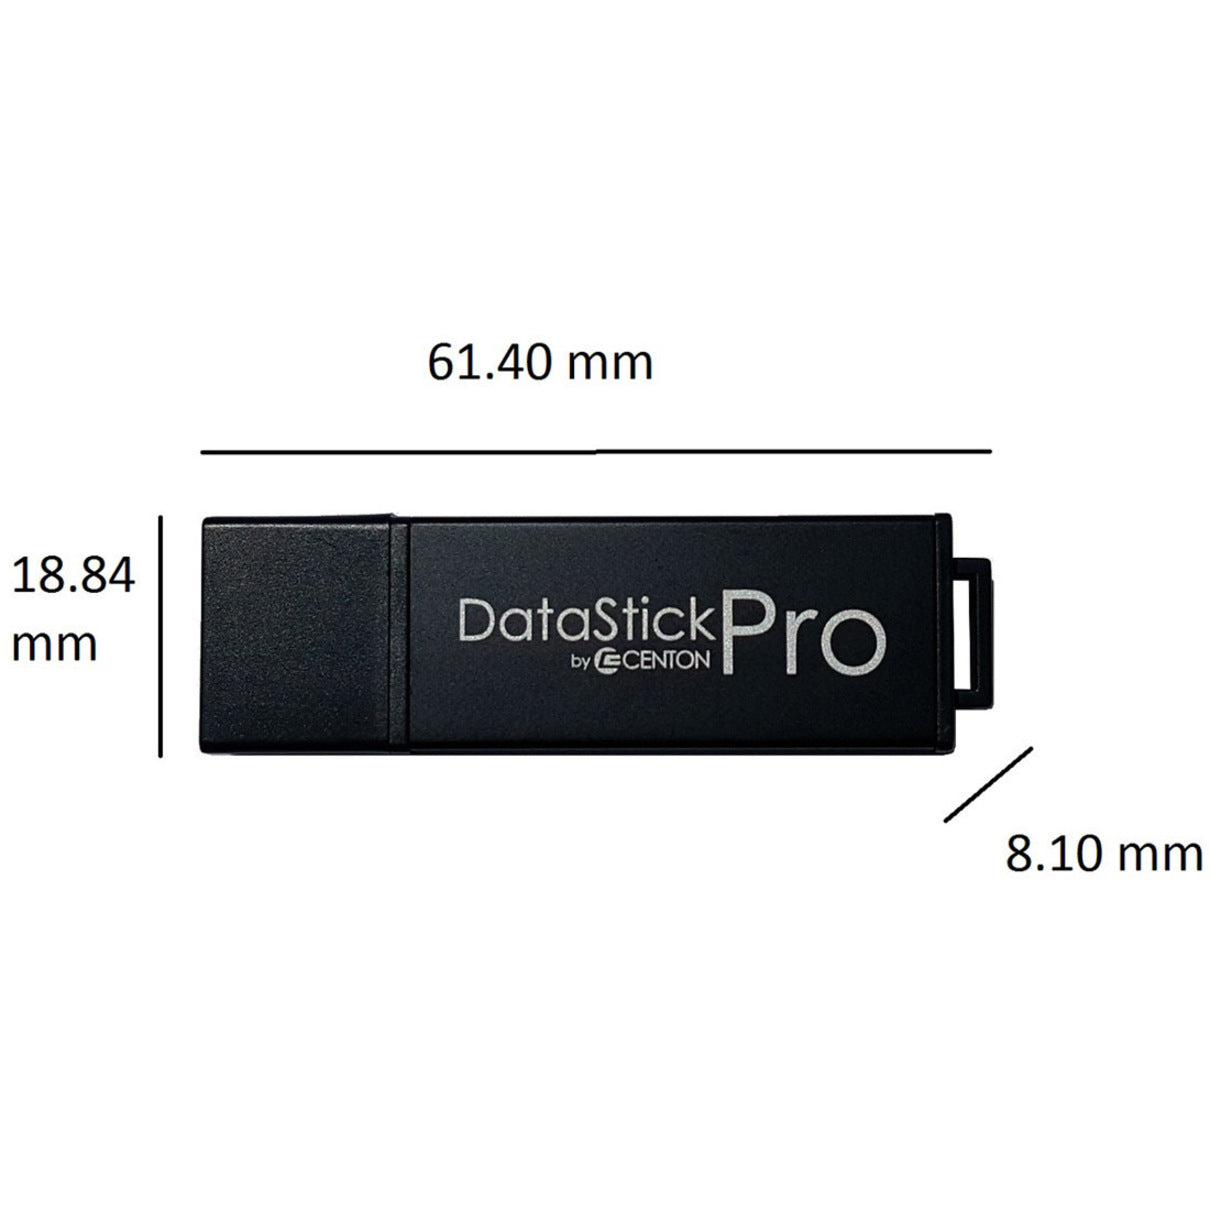 Centon 8 GB DataStick Pro USB 2.0 Flash Drive